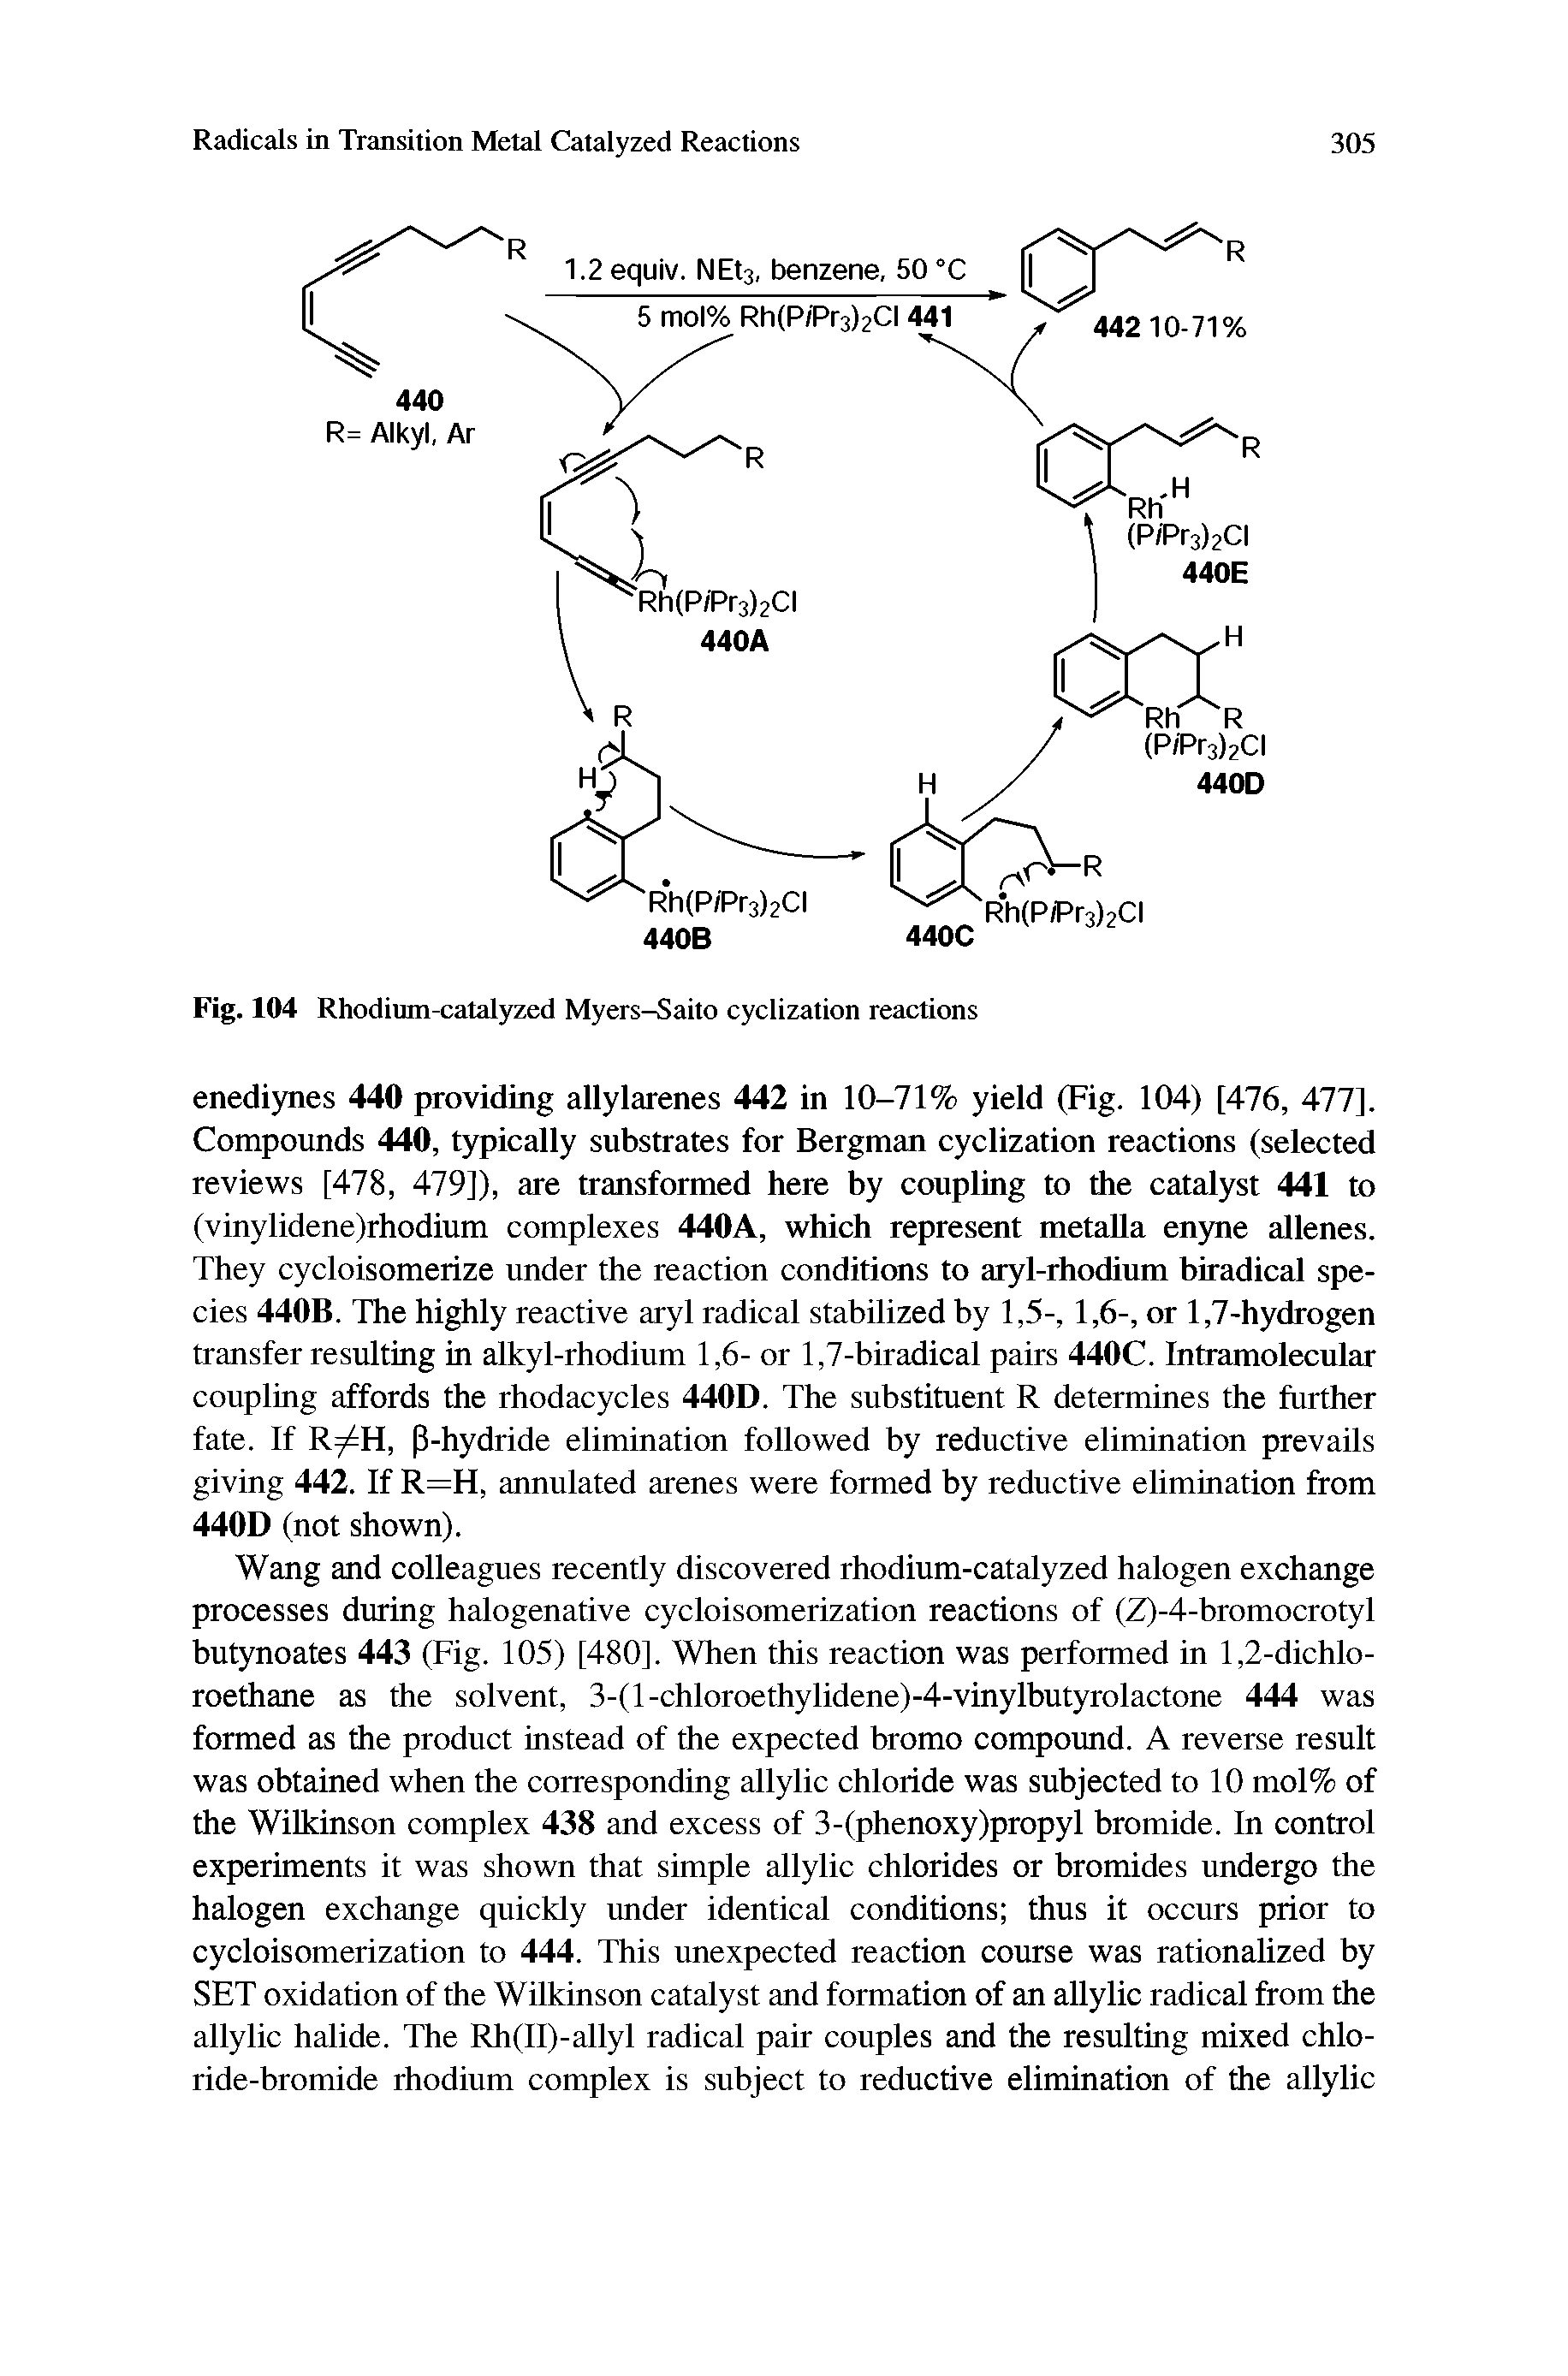 Fig. 104 Rhodium-catalyzed Myers-Saito cyclization reactions...